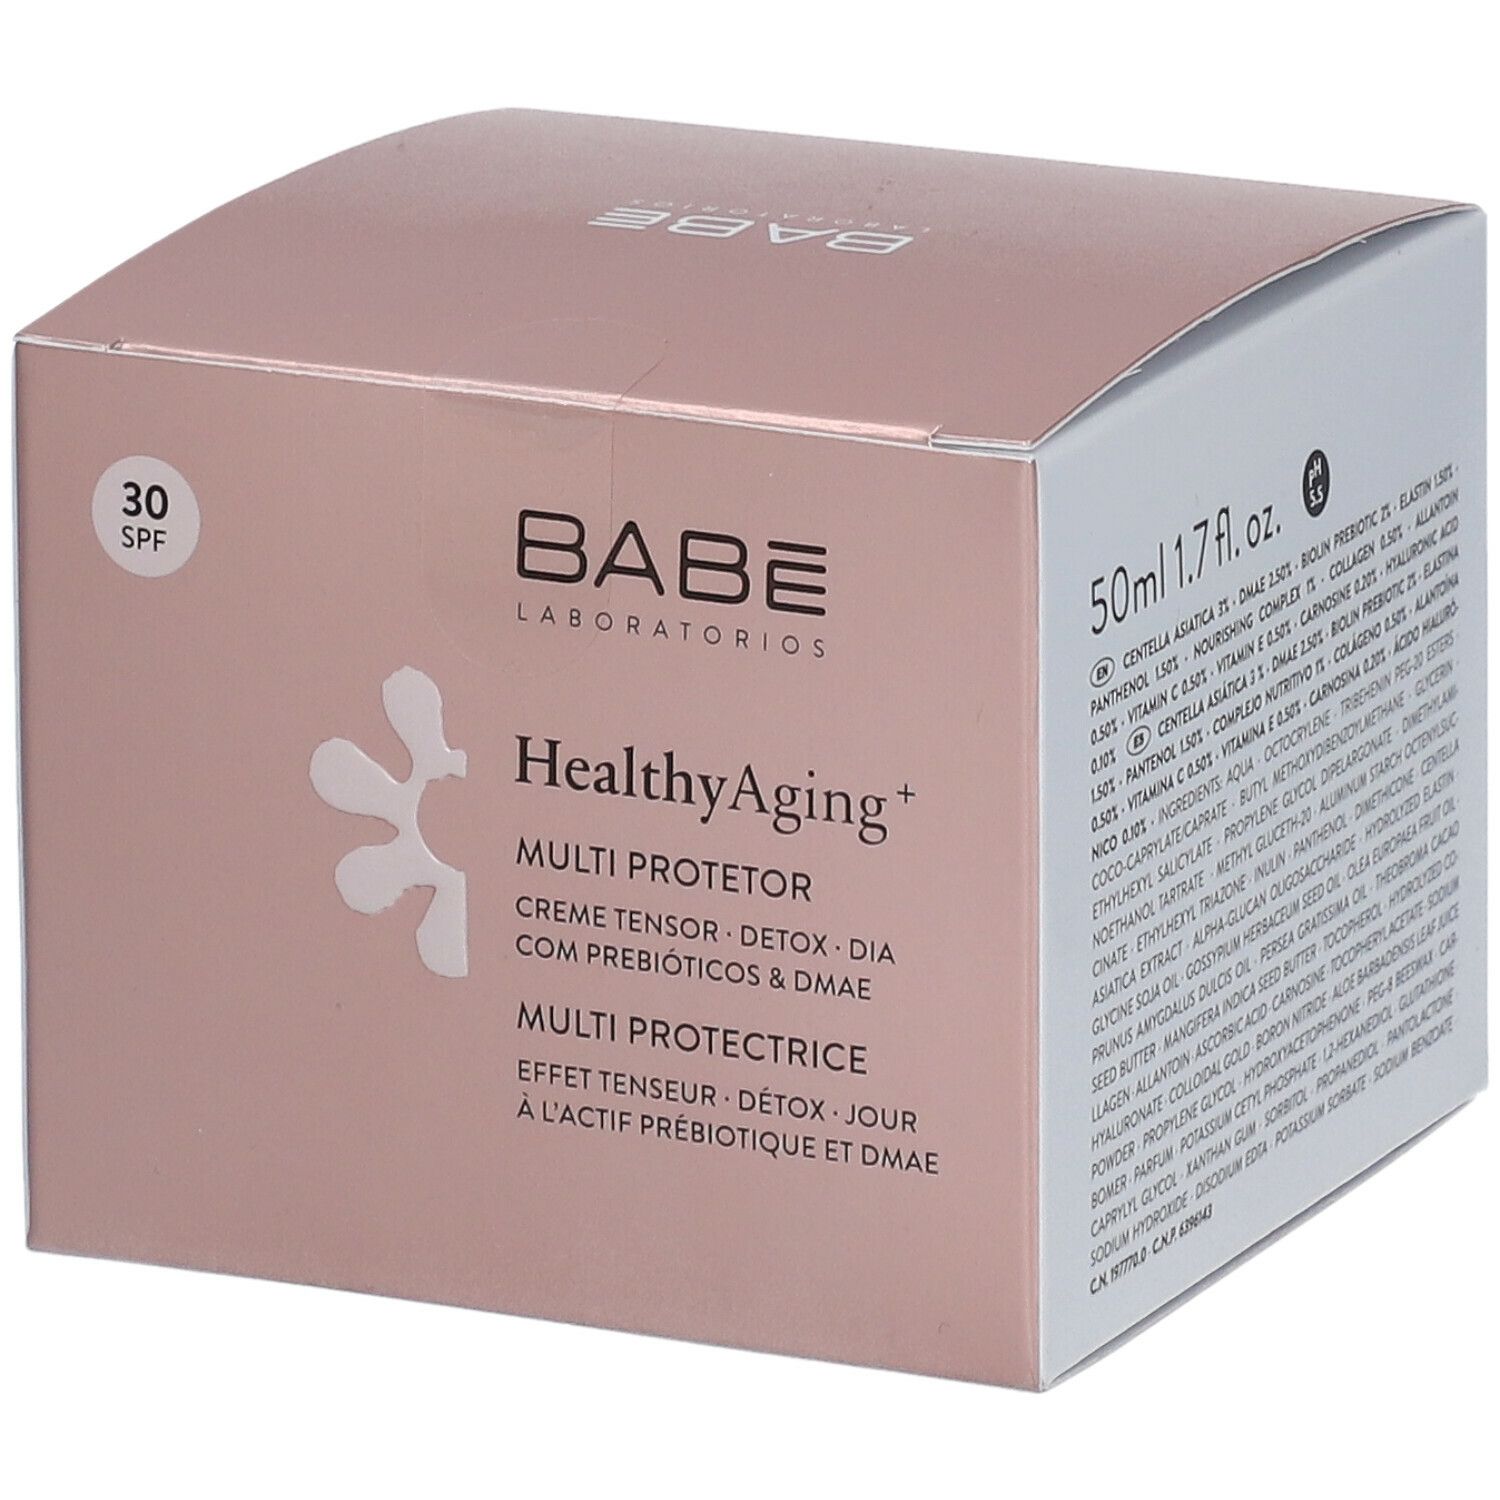 Babé HealthyAging+ Multi Protector Lifting Cream Spf30